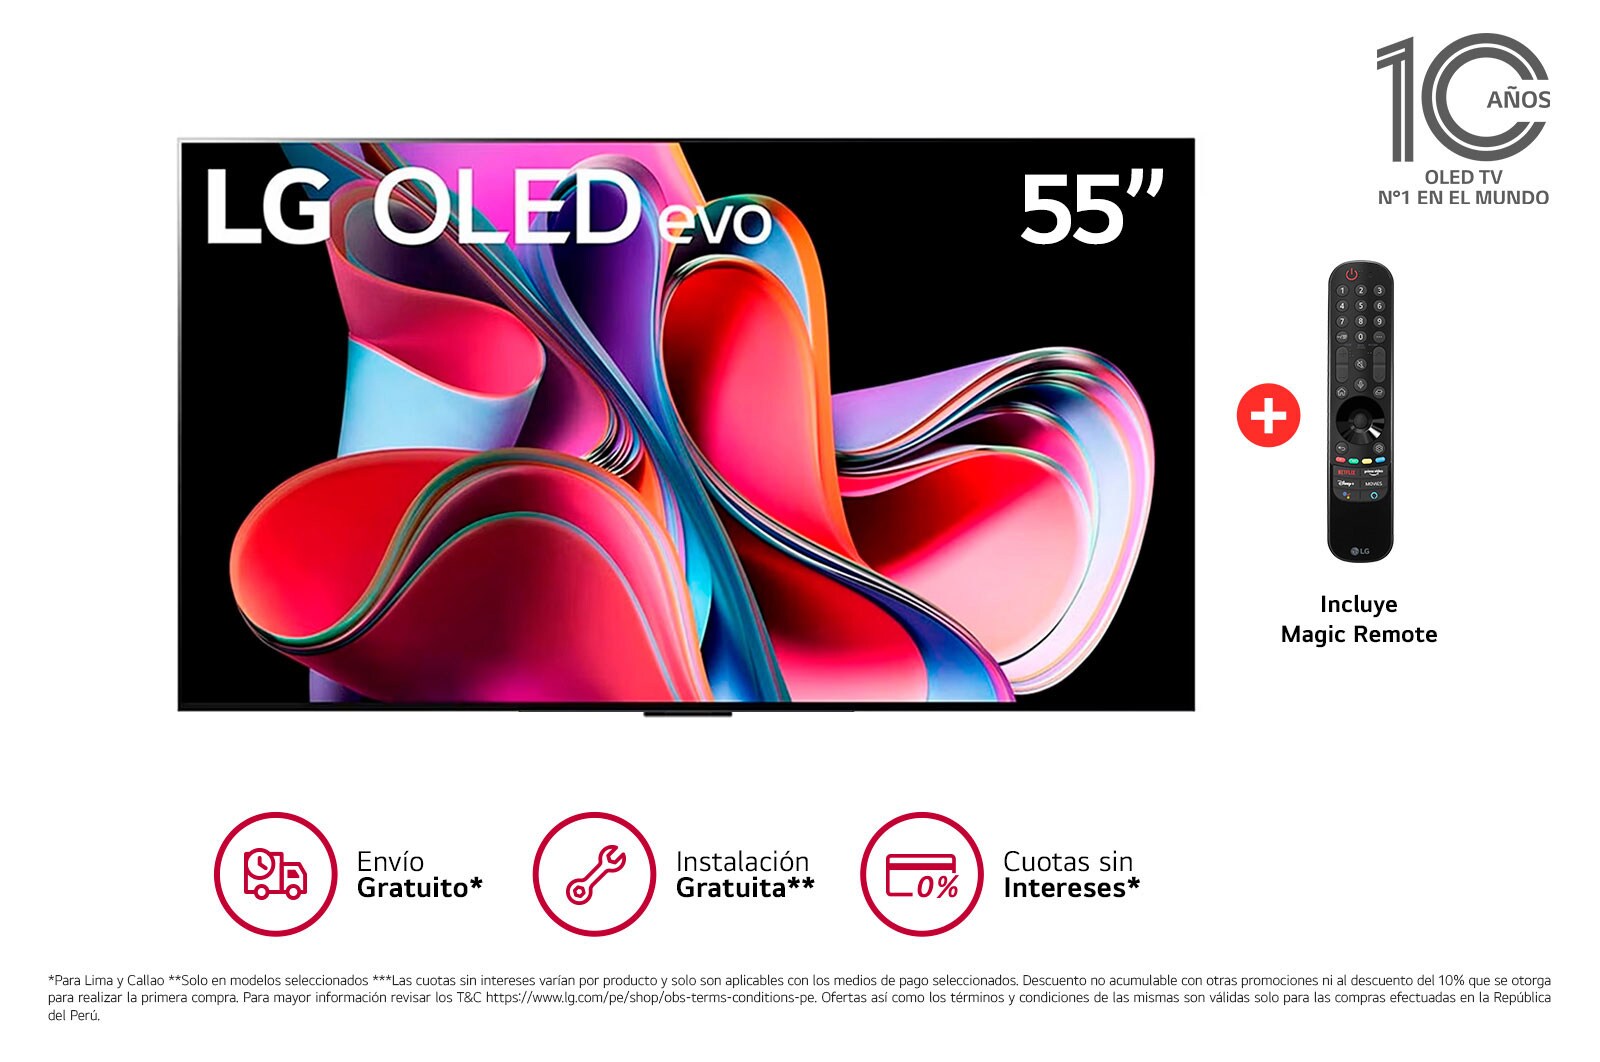 LG OLED evo 55 G3 Diseño Galería 4K Smart TV con ThinQ AI